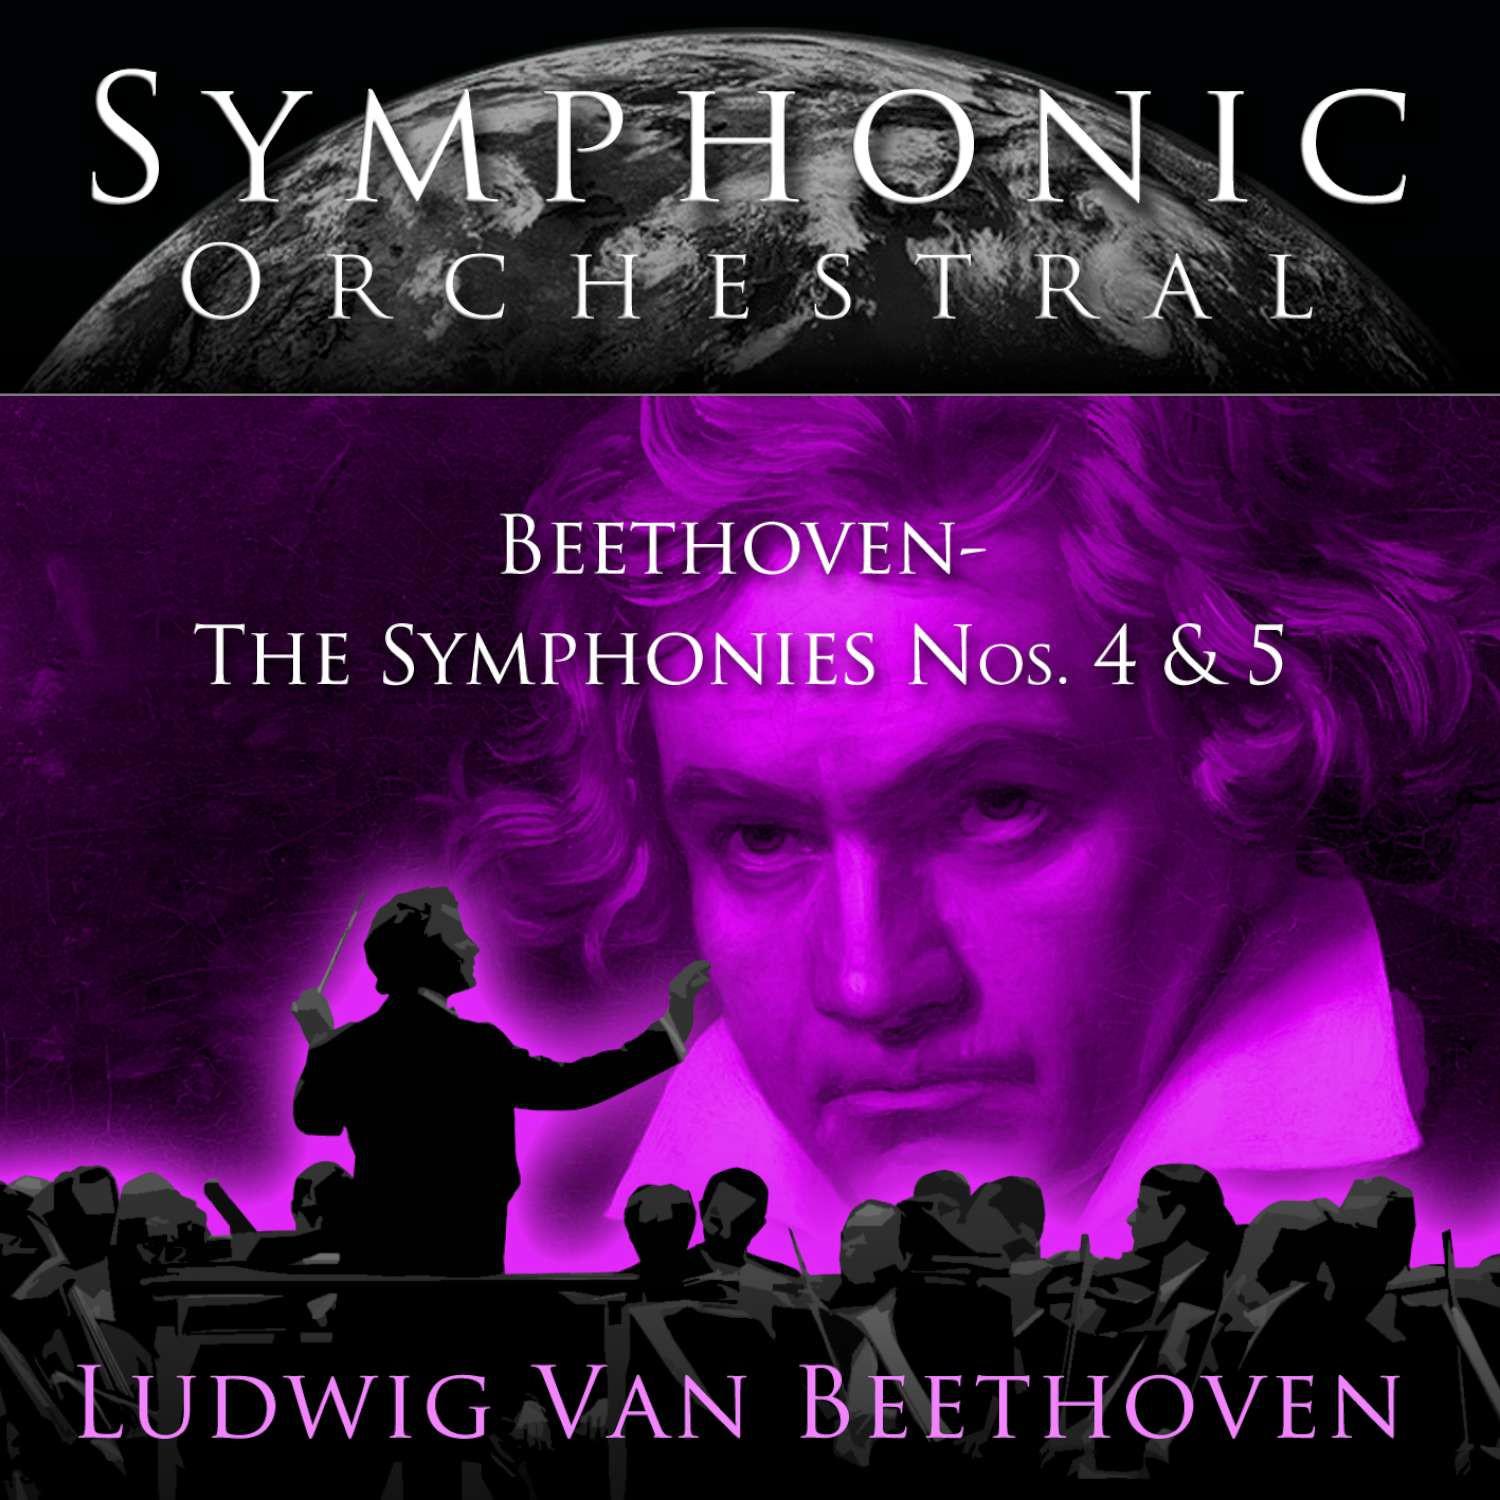 Beethoven: Symphony #5 in C Minor, Op. 67 - 2. Andante Con Moto